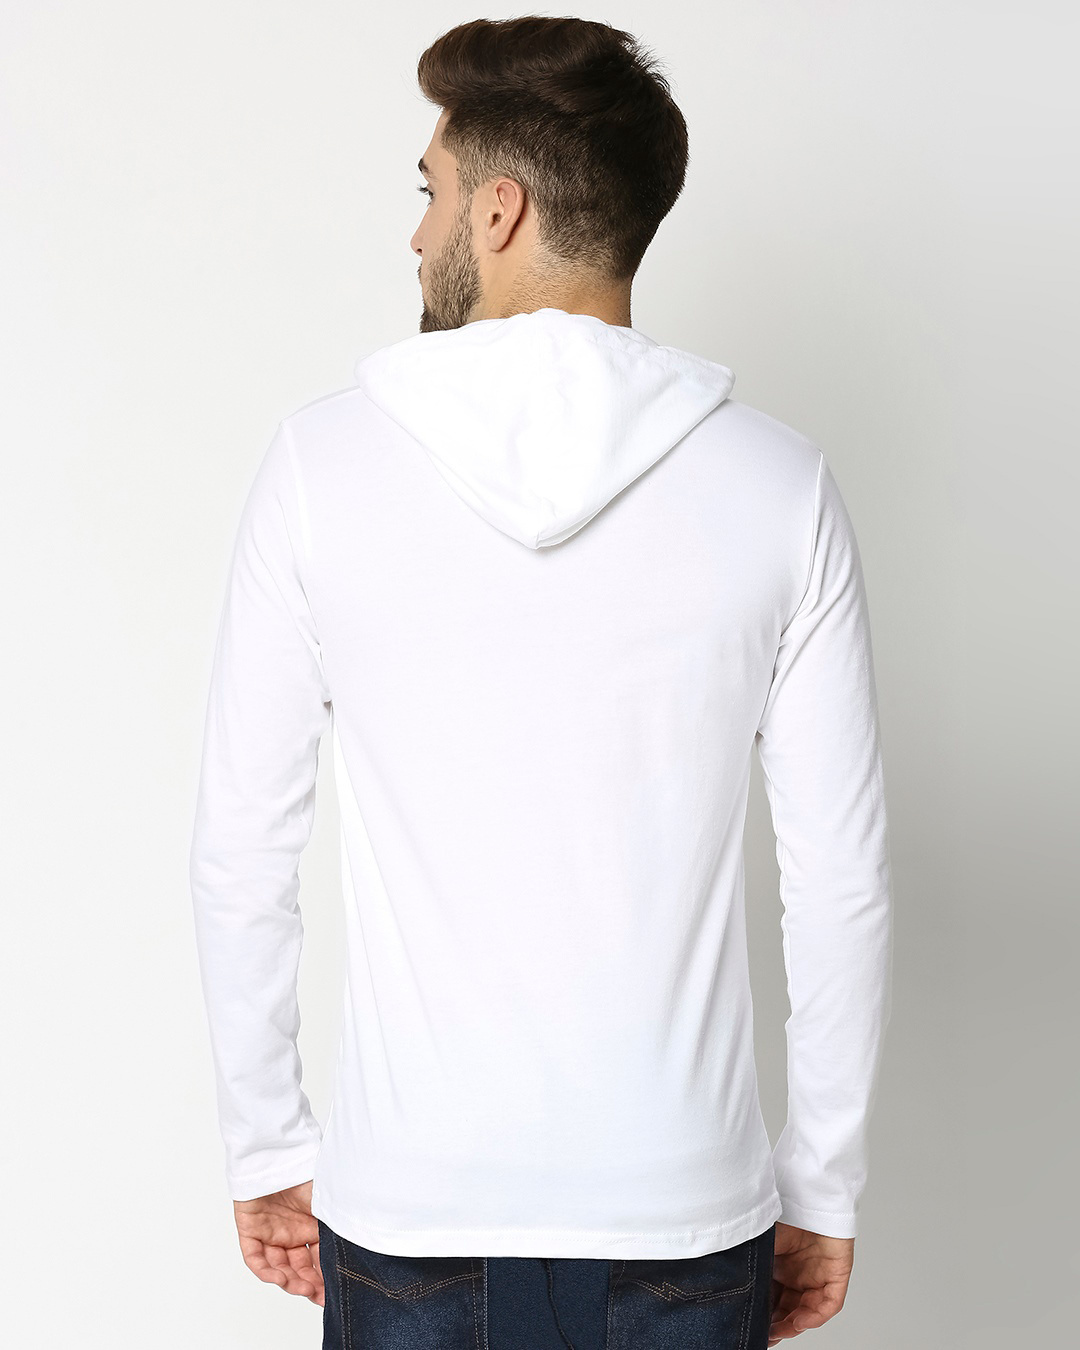 Shop Pop hope Full Sleeve Hoodie T-Shirt-Back